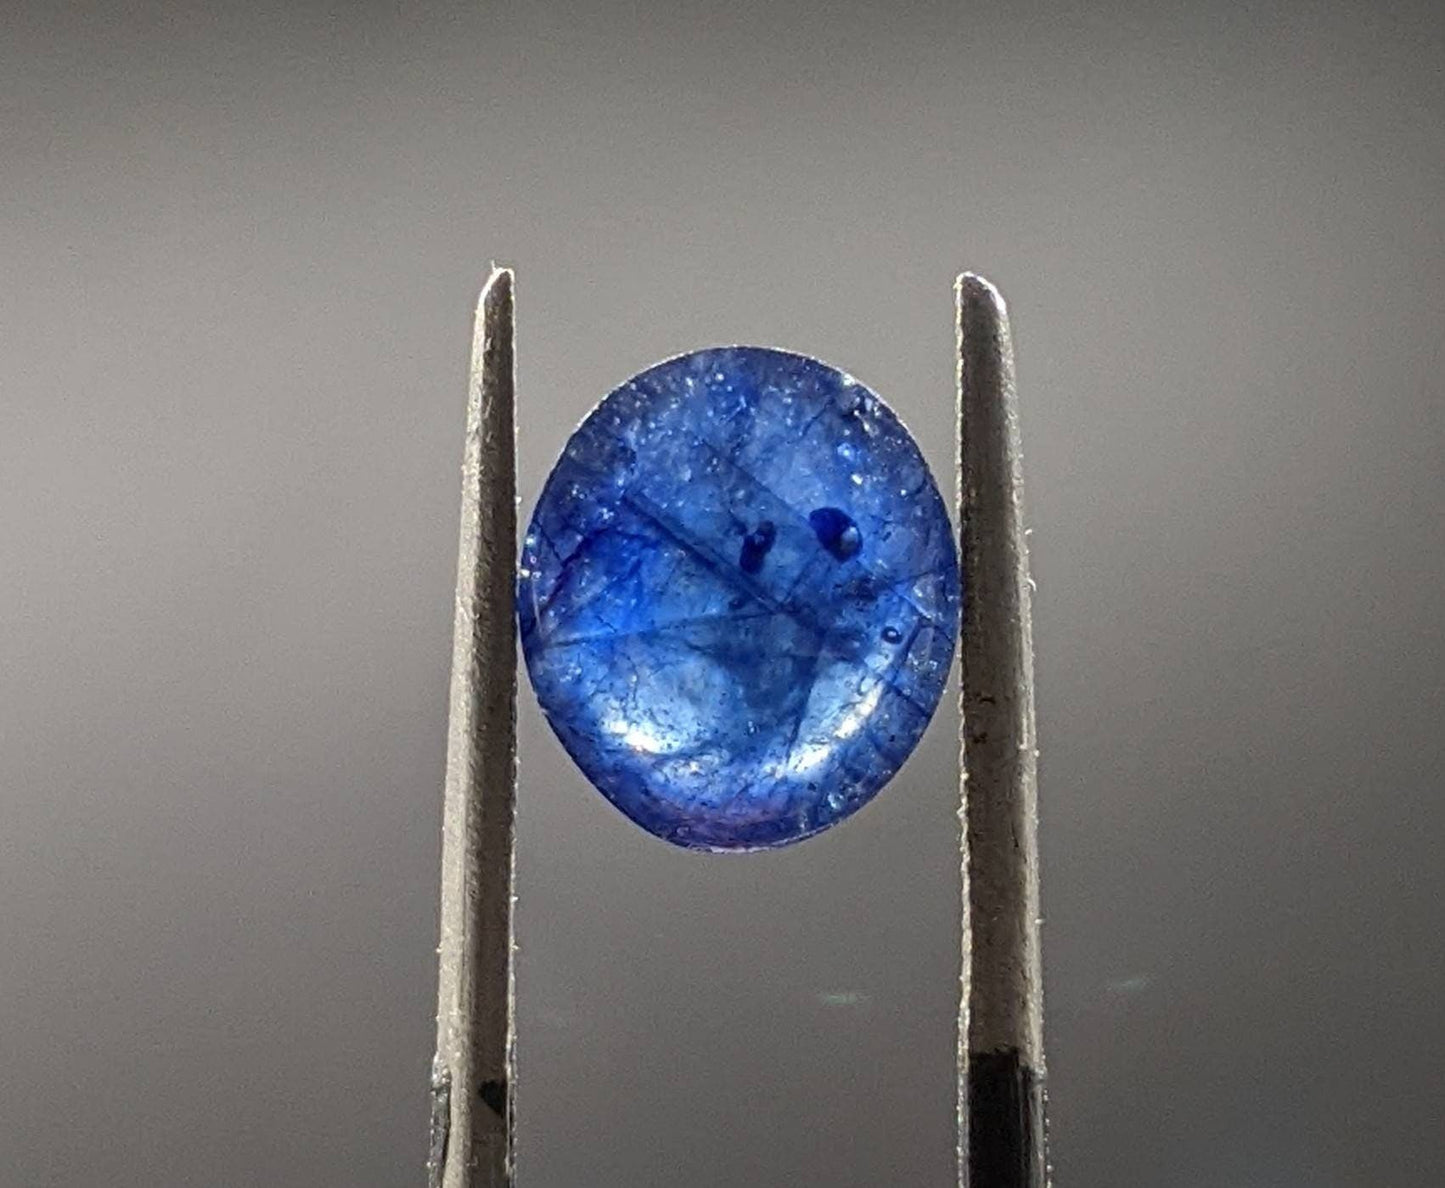 ARSAA GEMS AND MINERALSDark blue Sapphire cabochon from Badakhshan Afghanistan, 3.5 carats - Premium  from ARSAA GEMS AND MINERALS - Just $25.00! Shop now at ARSAA GEMS AND MINERALS